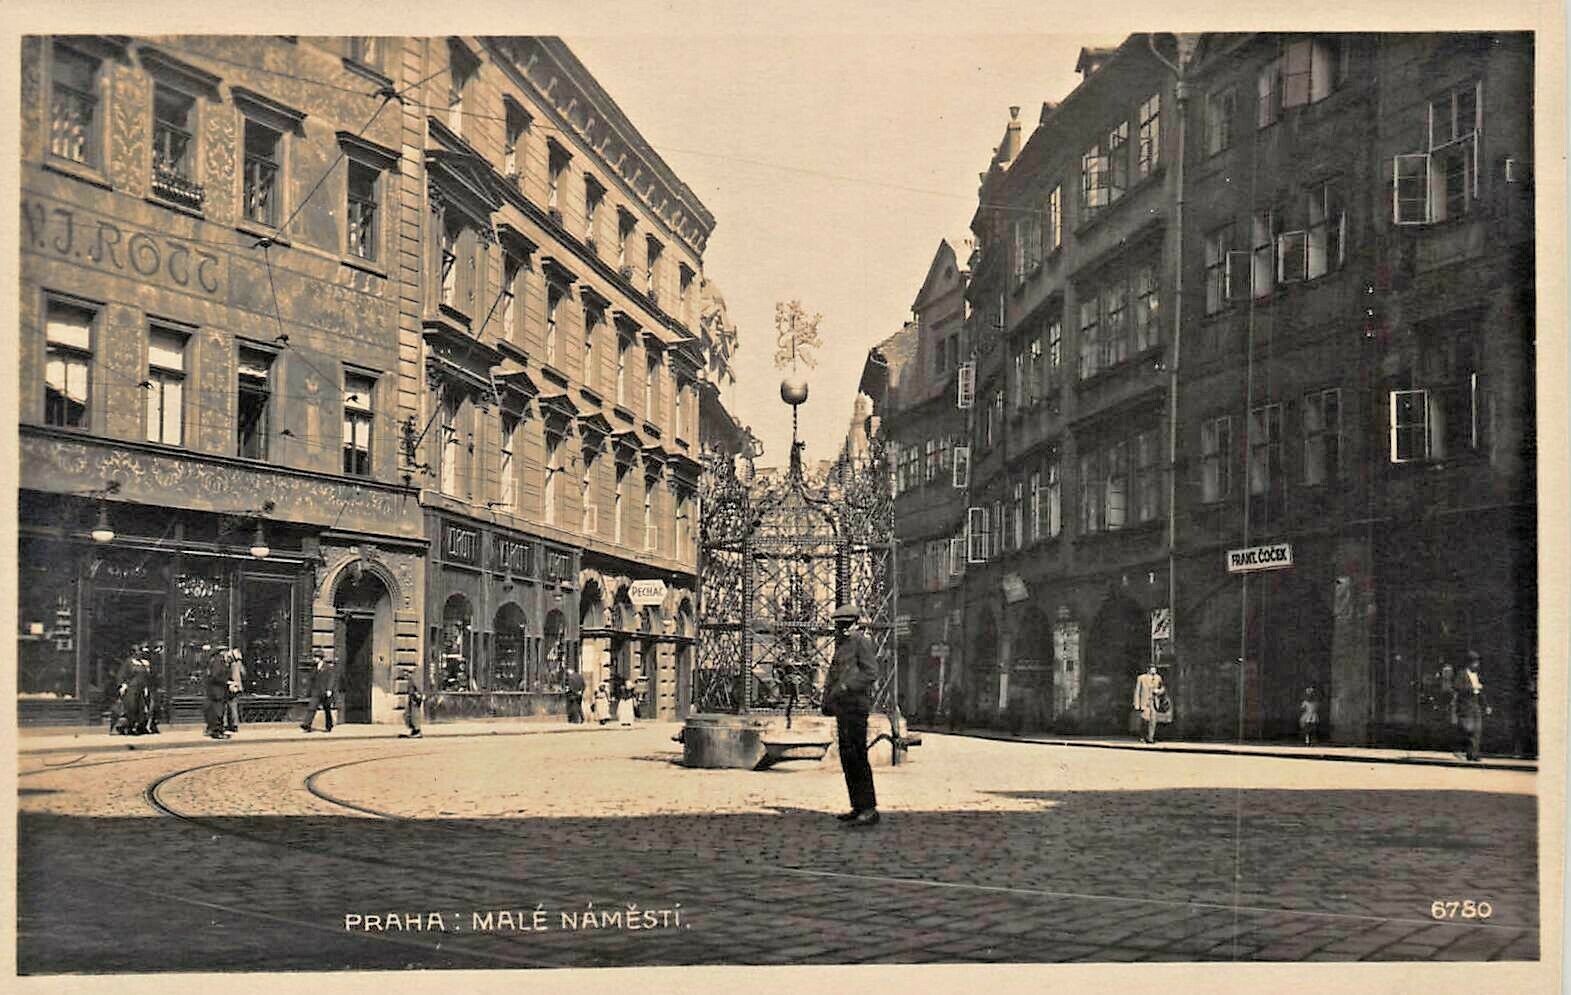 PRAHA PRAGUE CZECH REPUBLIC~MALE NAMESTI~1910s PHOTO POSTCARD